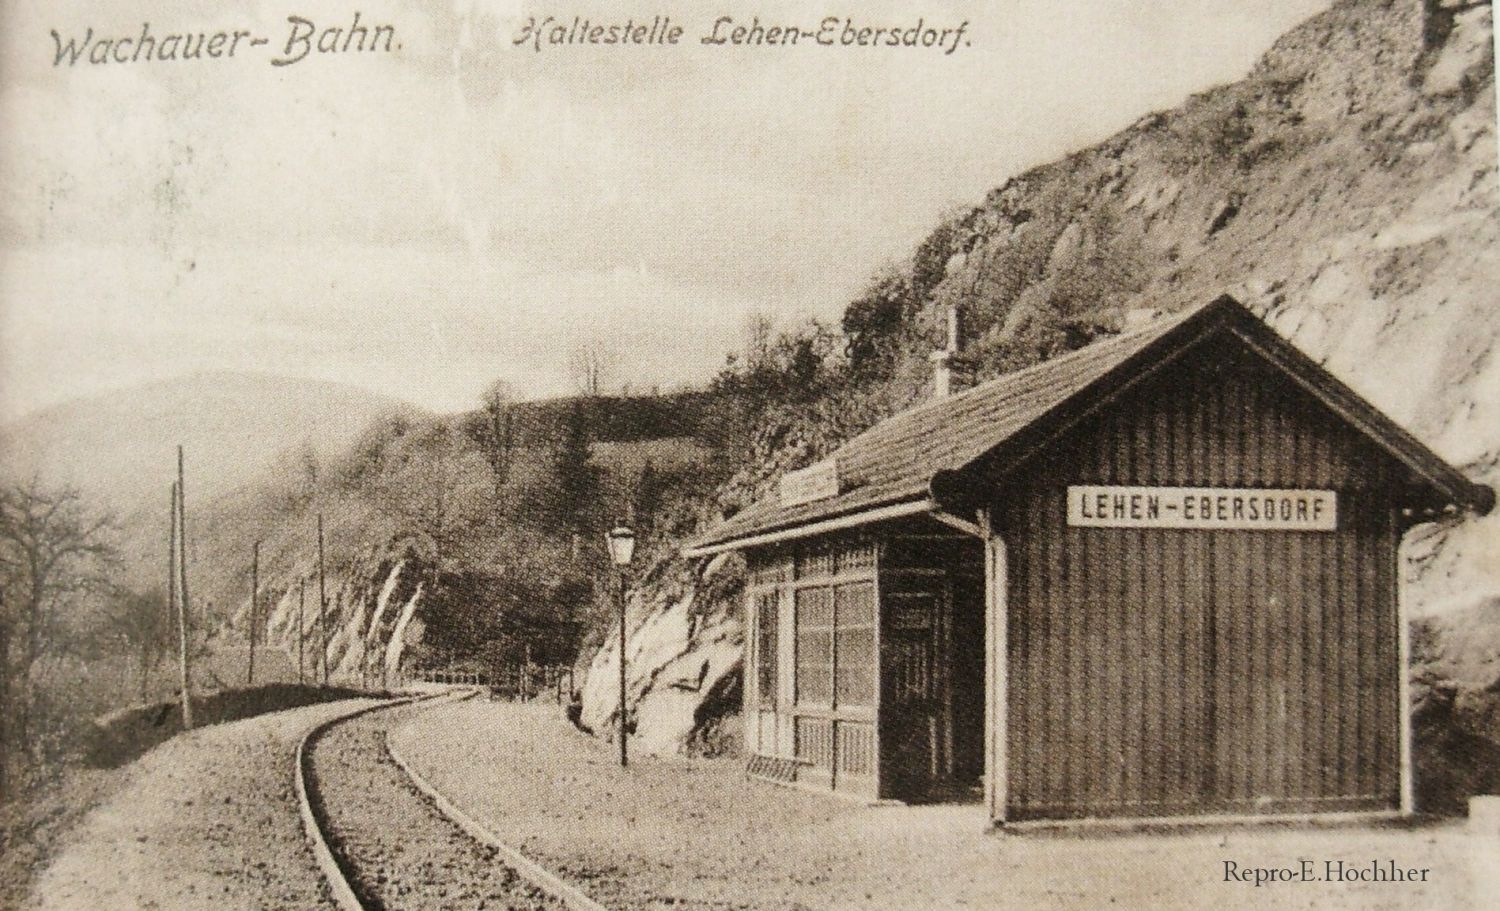 Haltestelle Lehen-Ebersdorf 1910